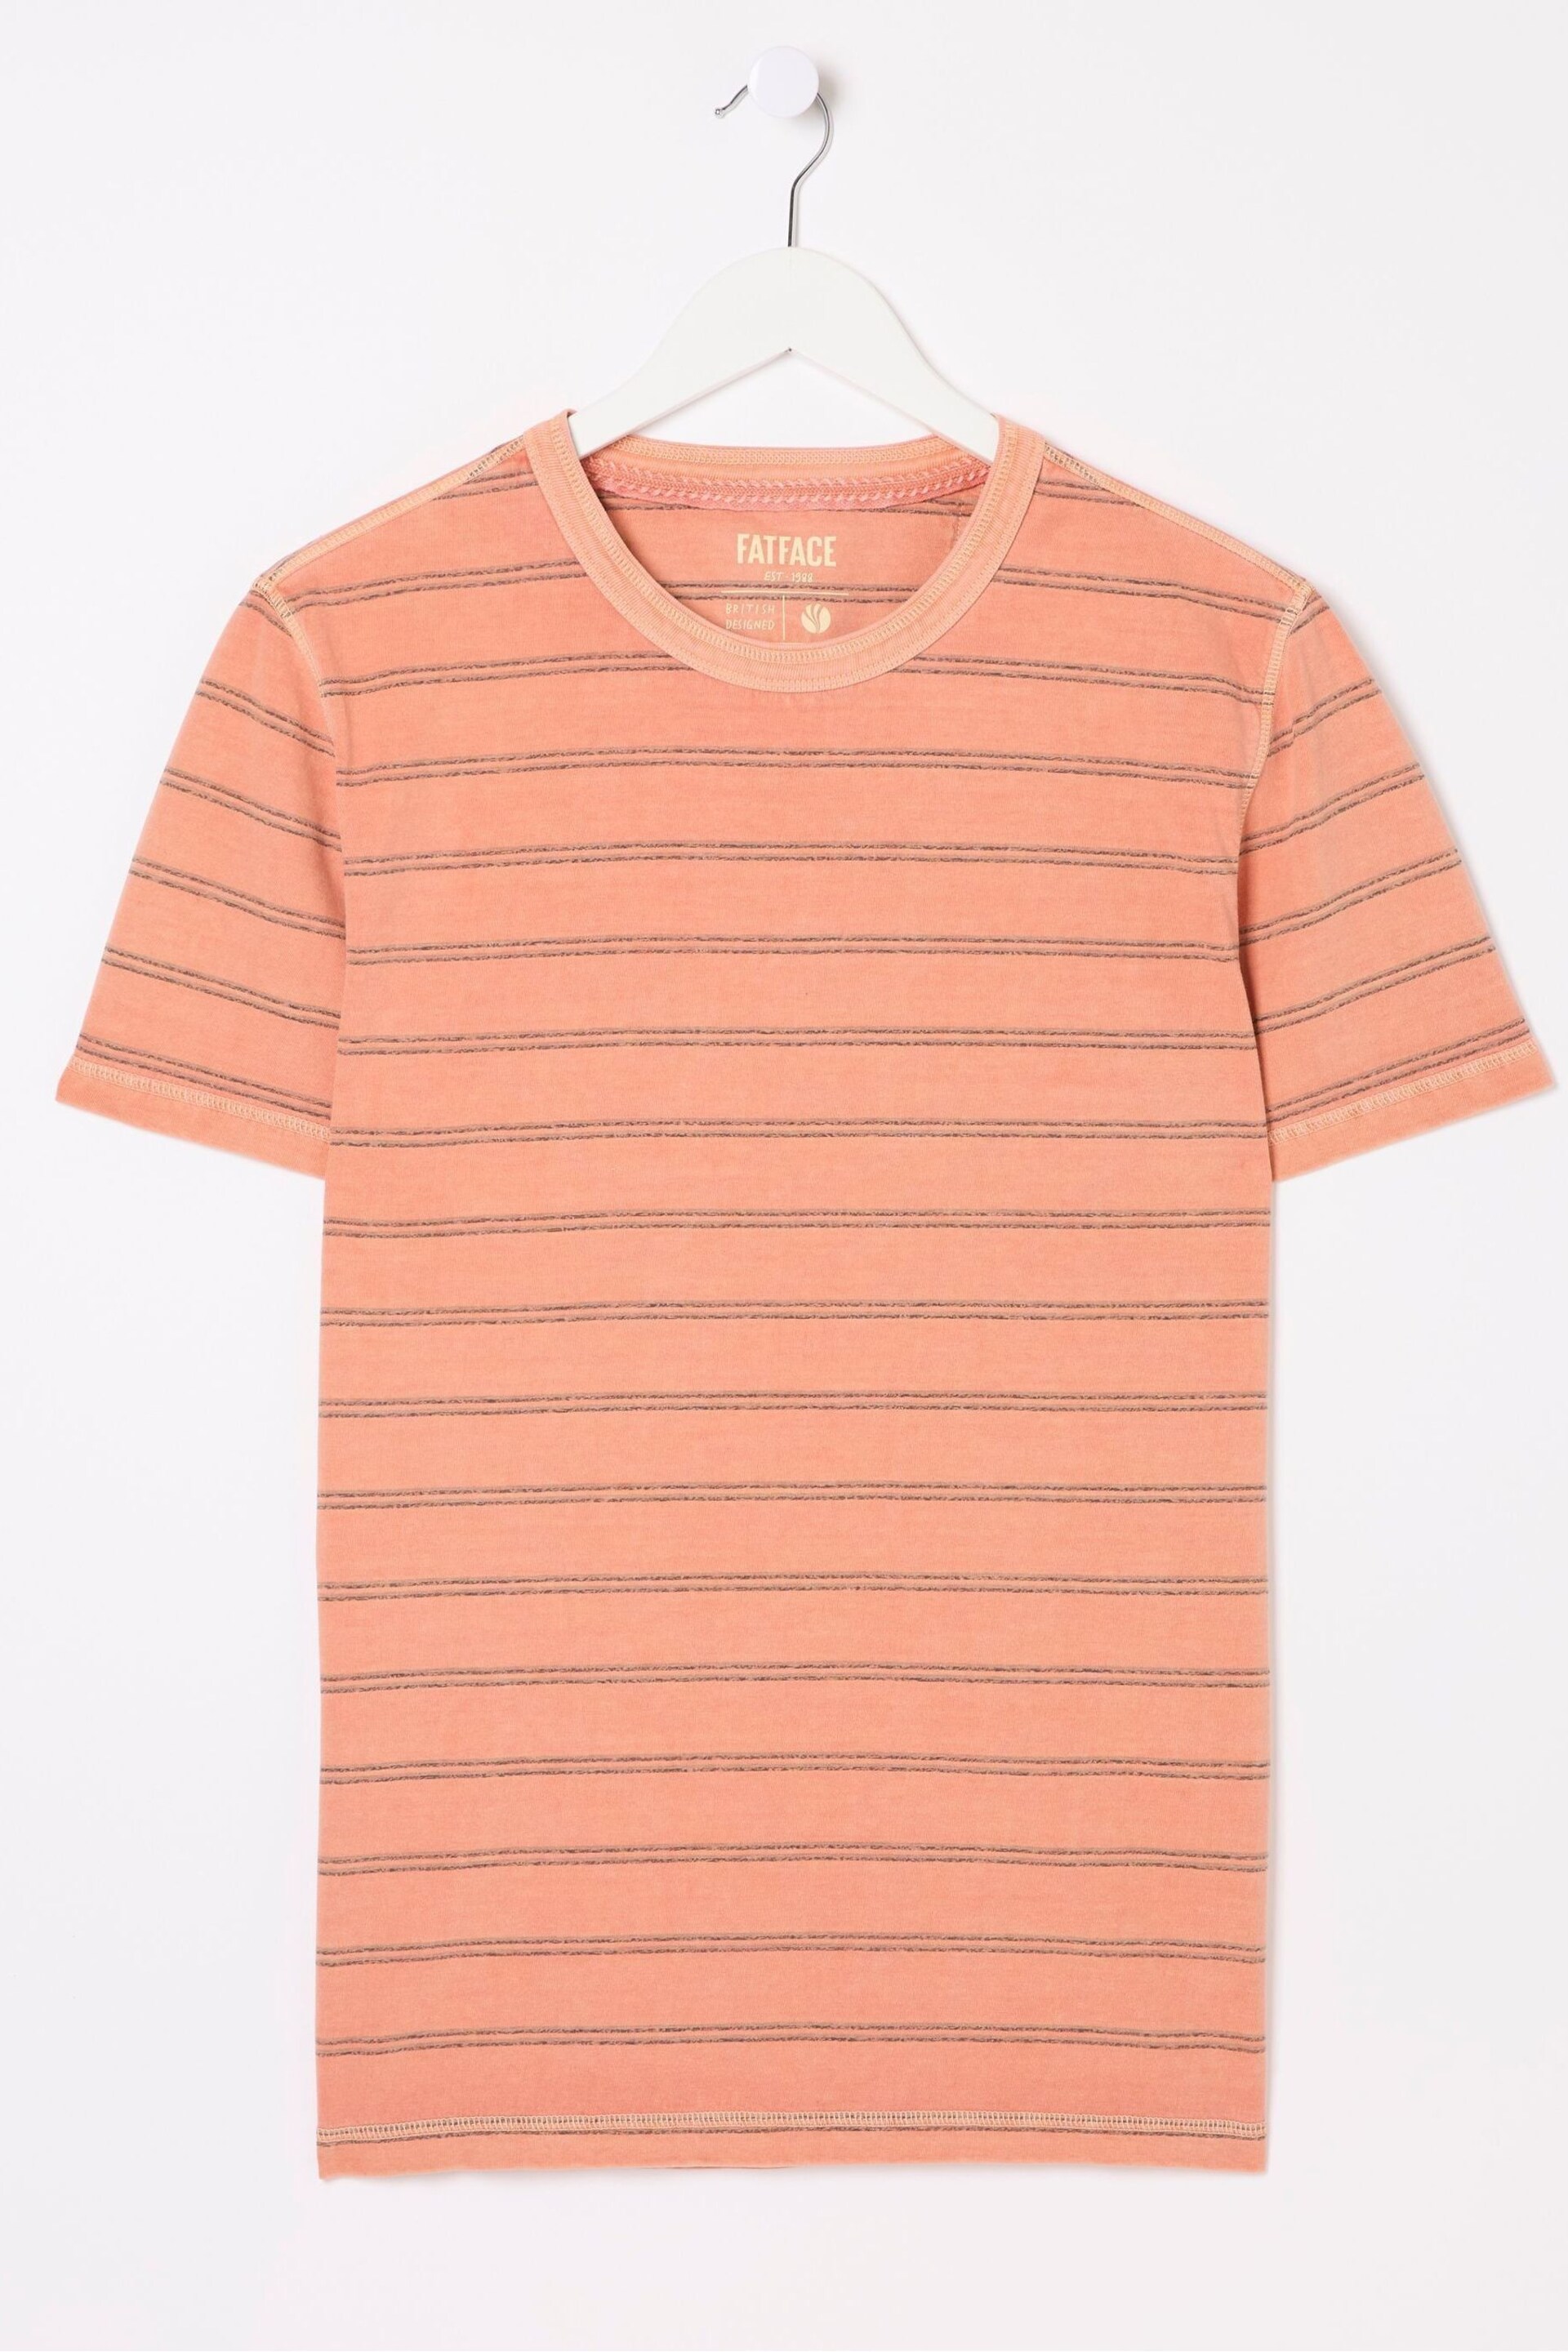 FatFace Orange Stripe T-Shirt - Image 6 of 6